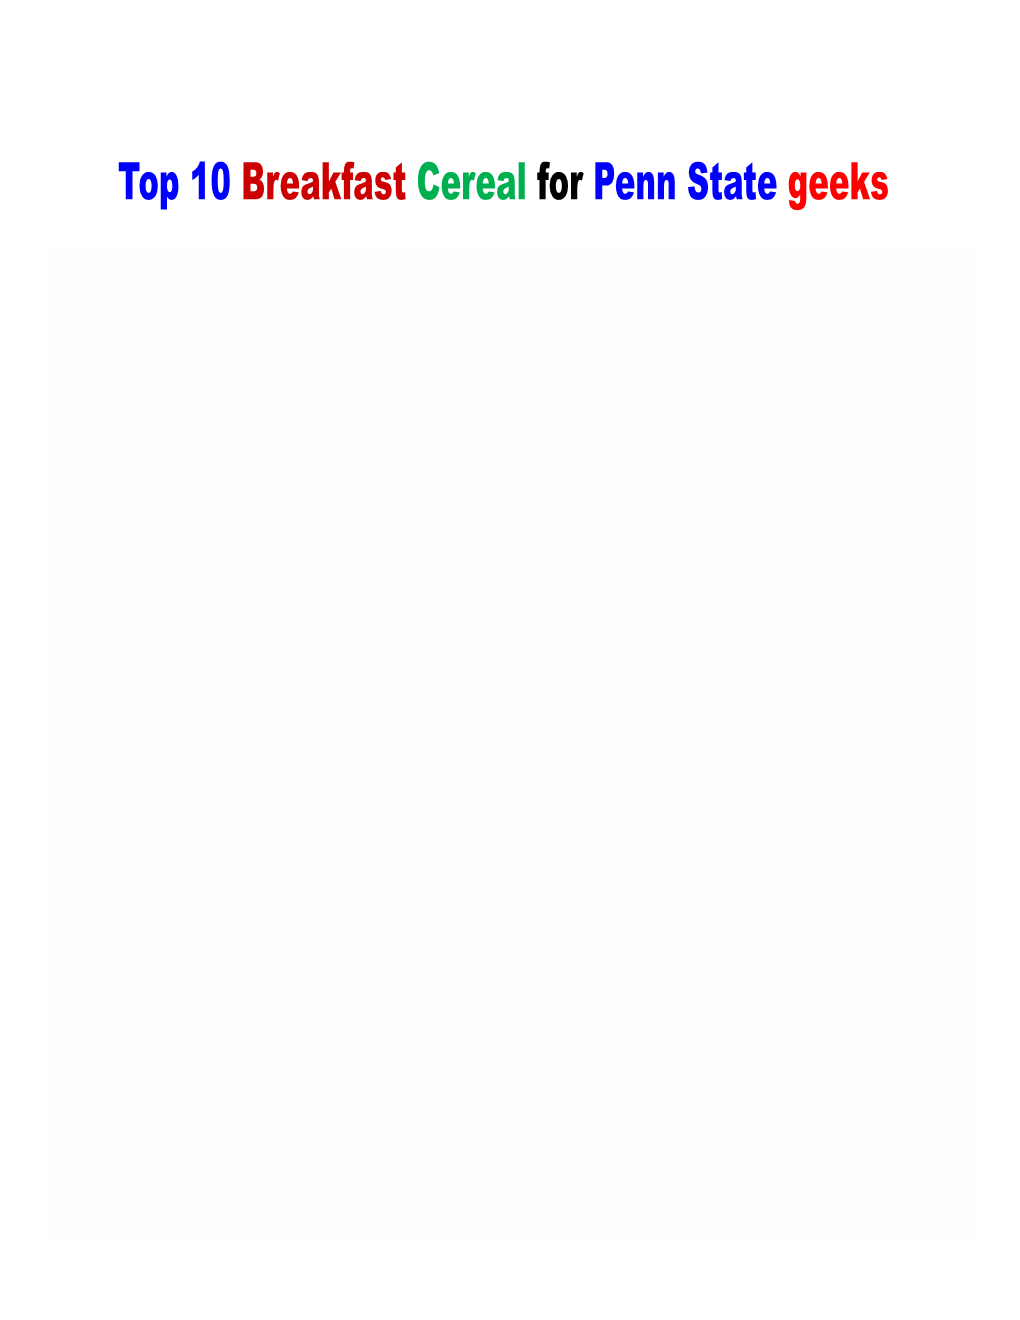 Top 10 Breakfast Cereal for Penn State Geeks Top 10 Breakfast Cereal for Penn State Geeks